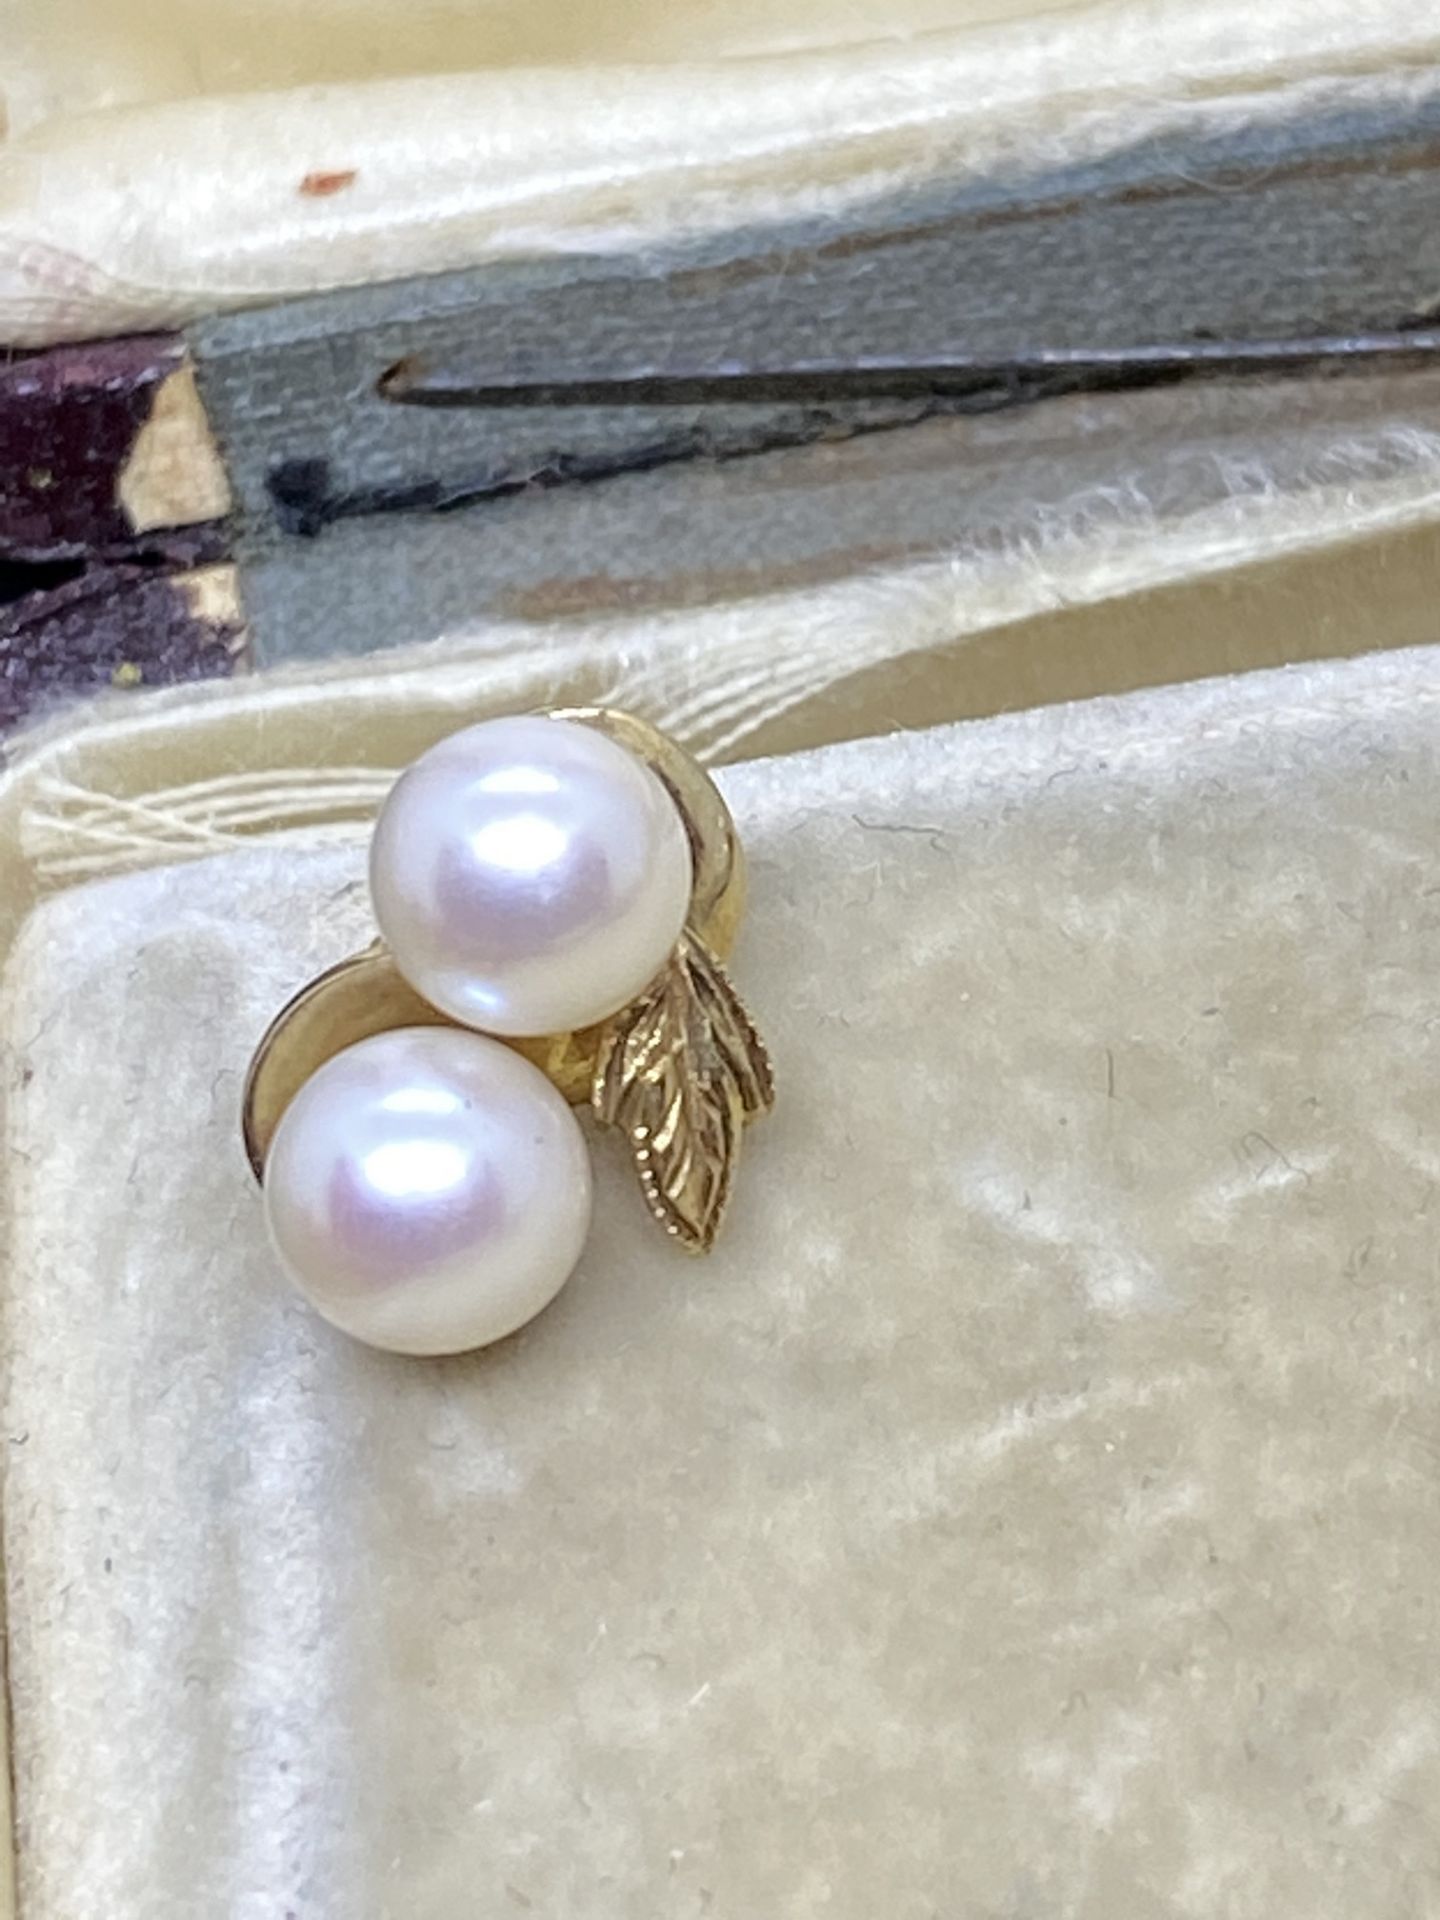 14k Gold Pearl Earrings - Image 2 of 2